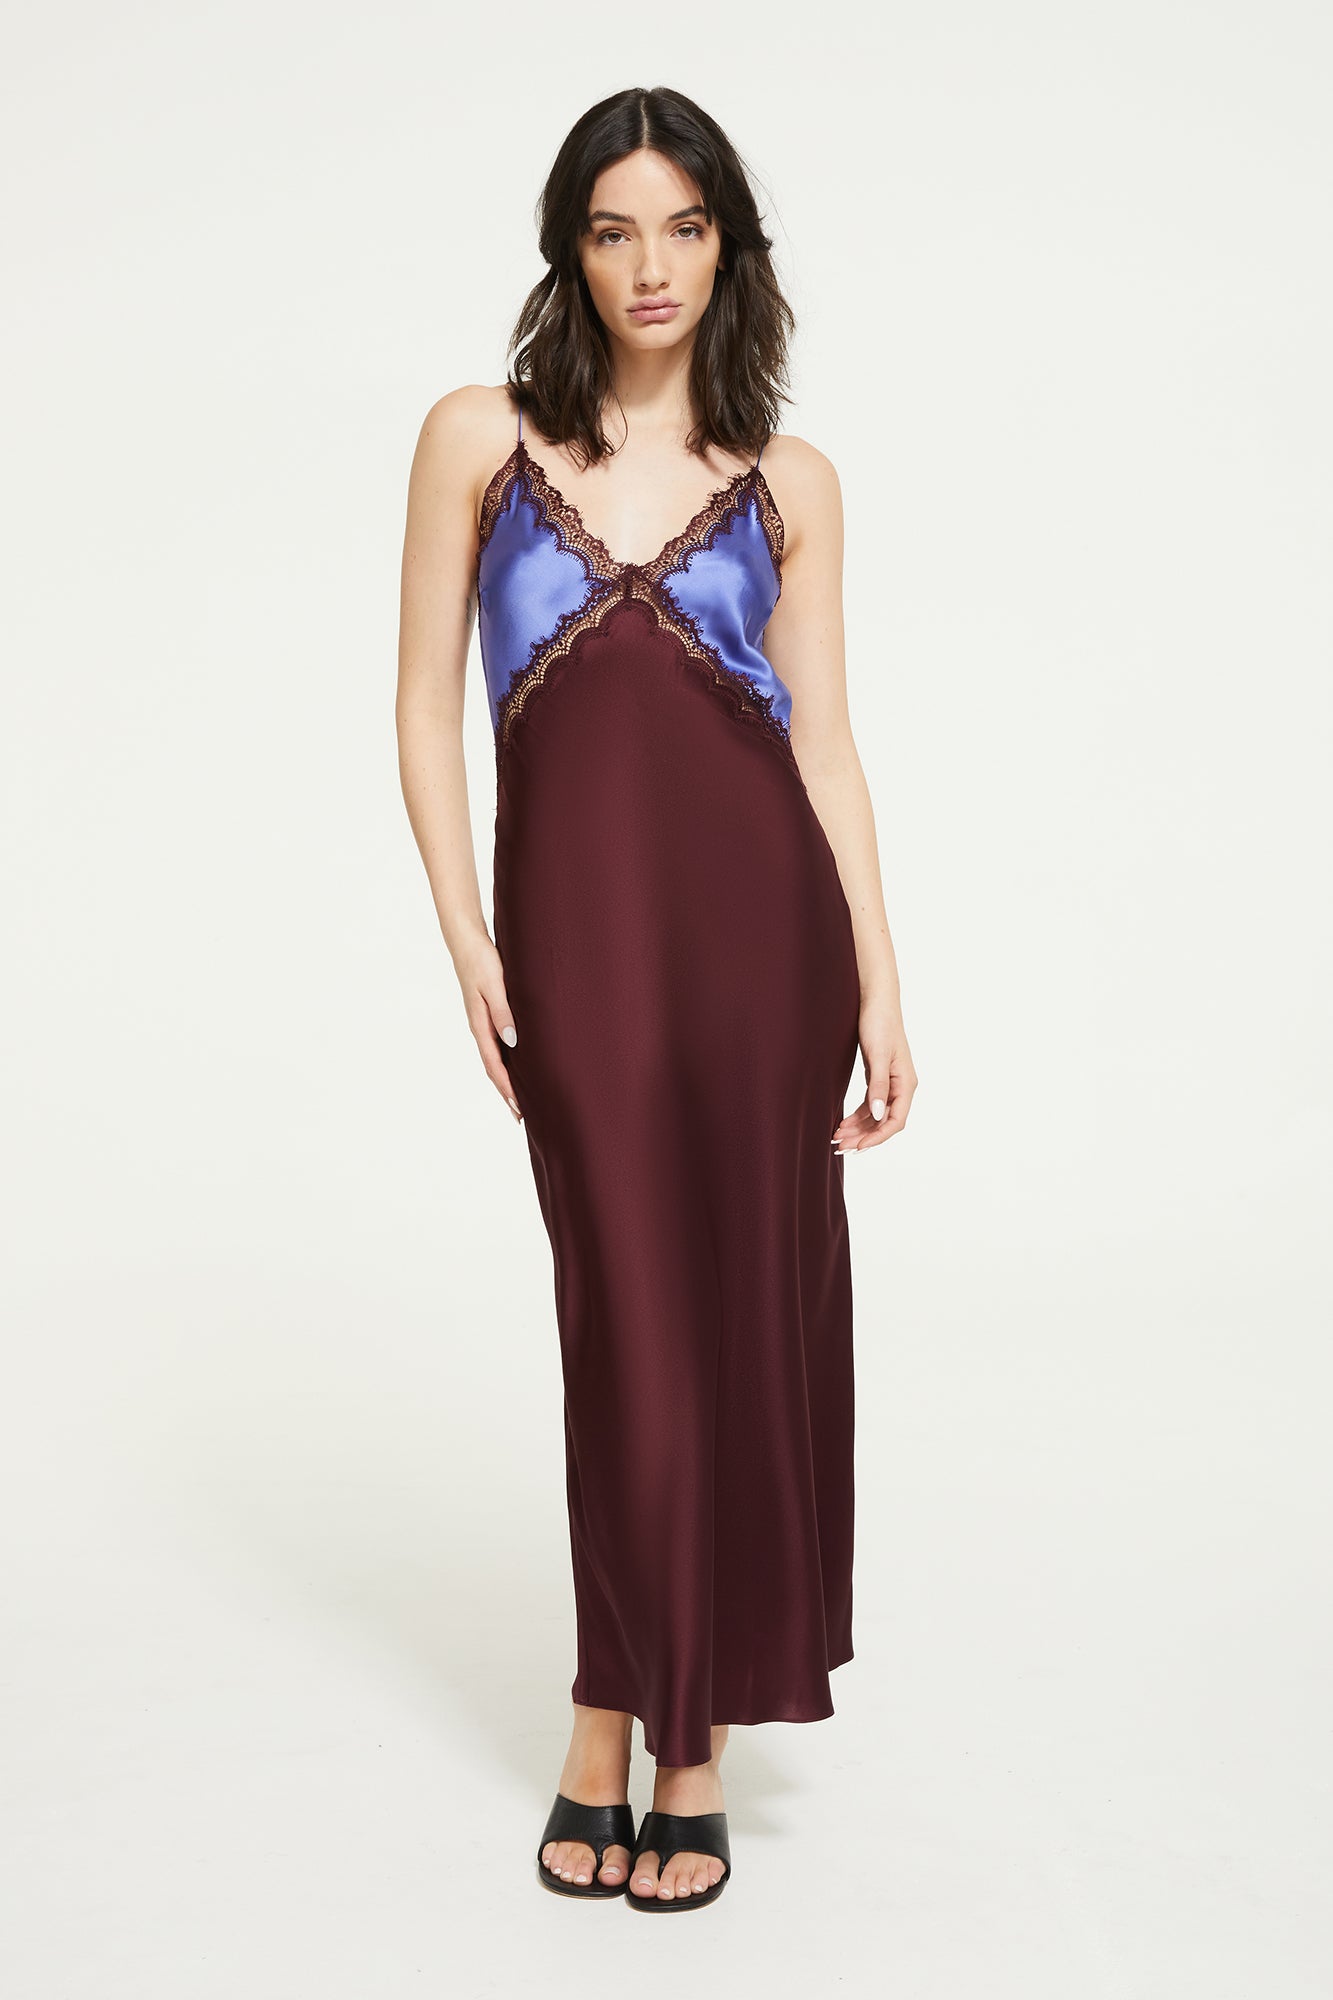 The Sadie Dress in Matisse Blue & Merlot - 100% Silk by Ginia RTW